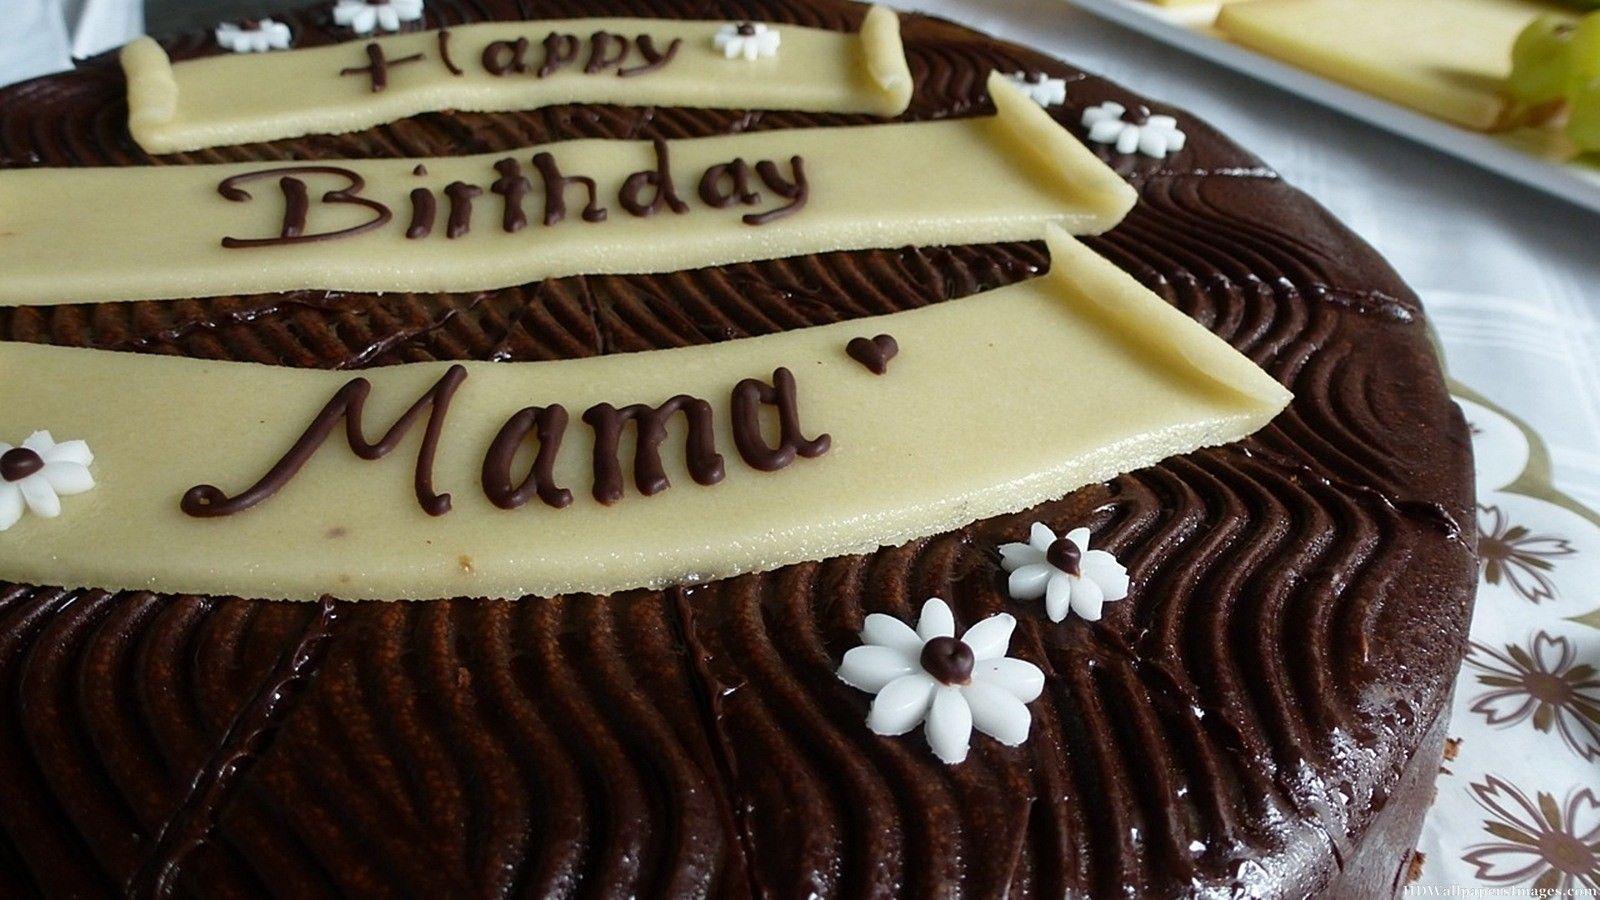 Happy Birthday Mama ji